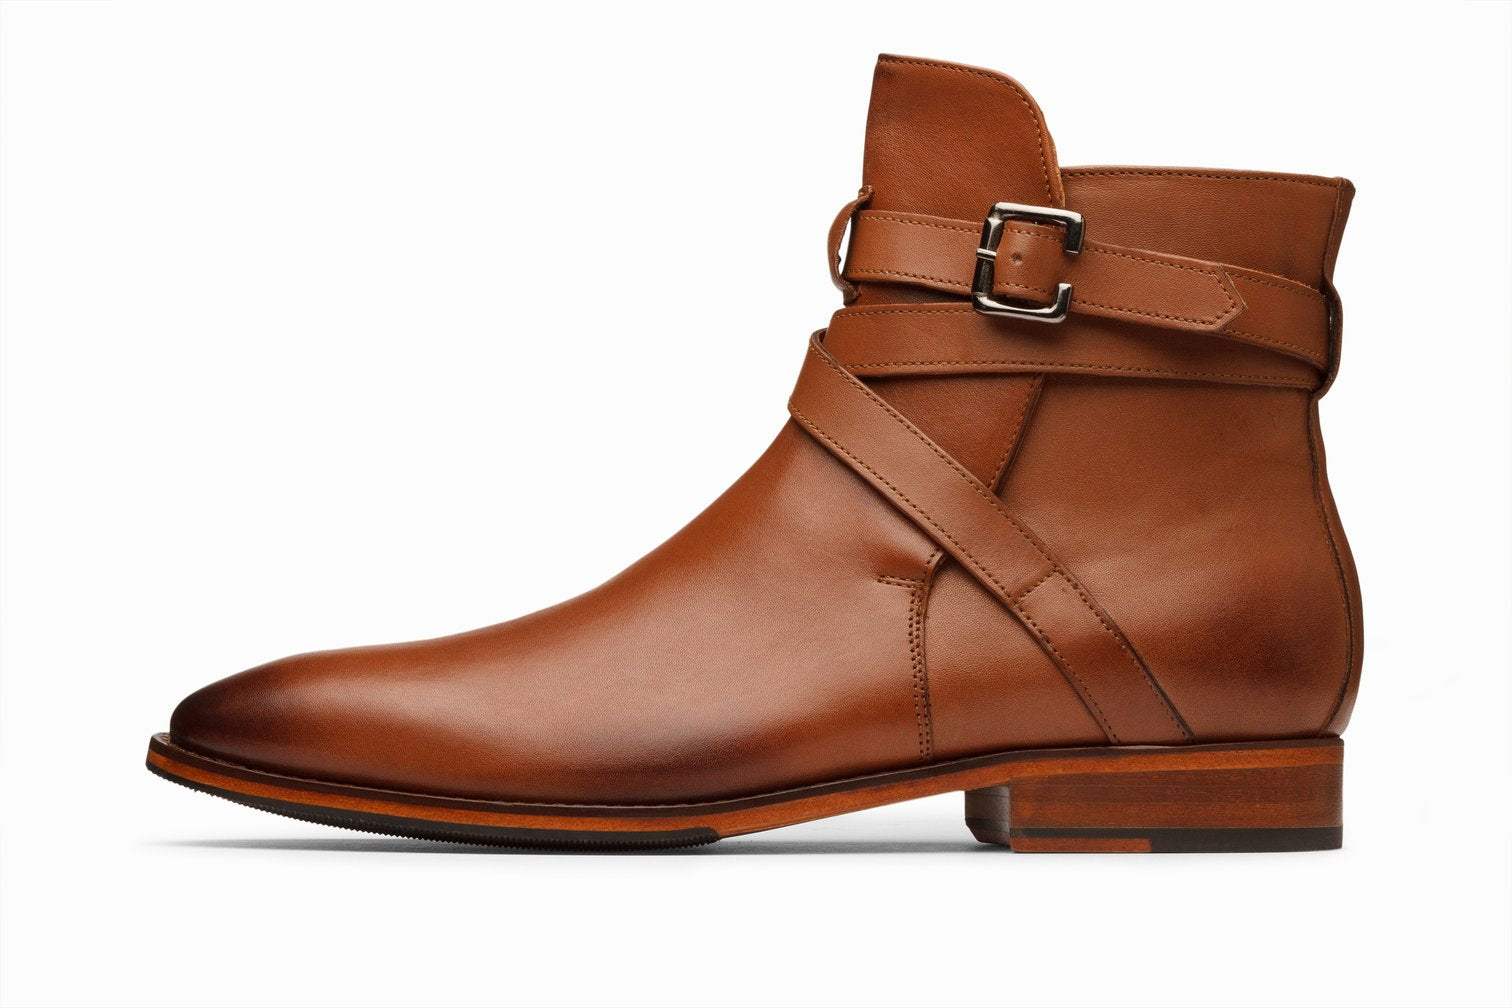 Jodhpur boot in tan colour, best leather shoes for men Dubai. 